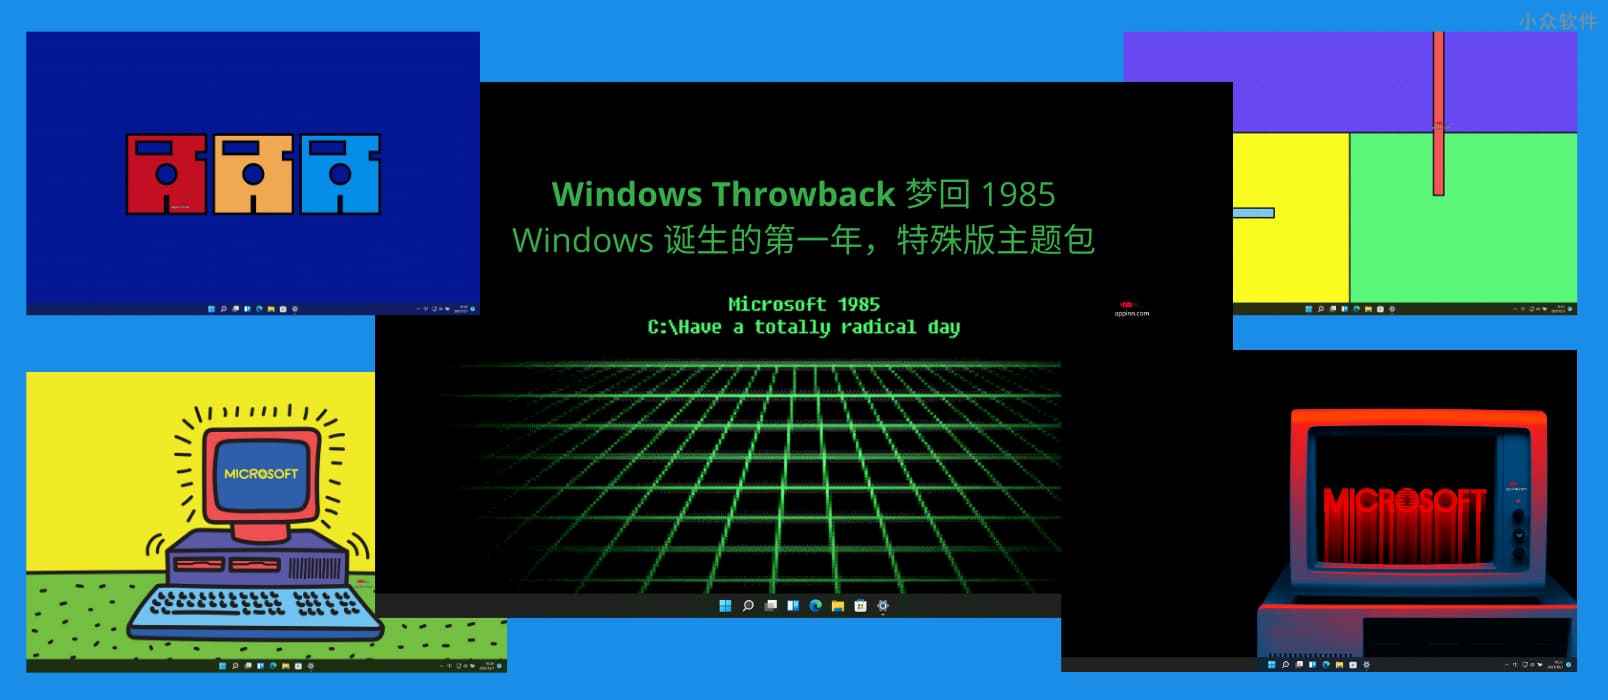 Windows Throwback – 梦回 1985，Windows 诞生的第一年，特殊版主题包